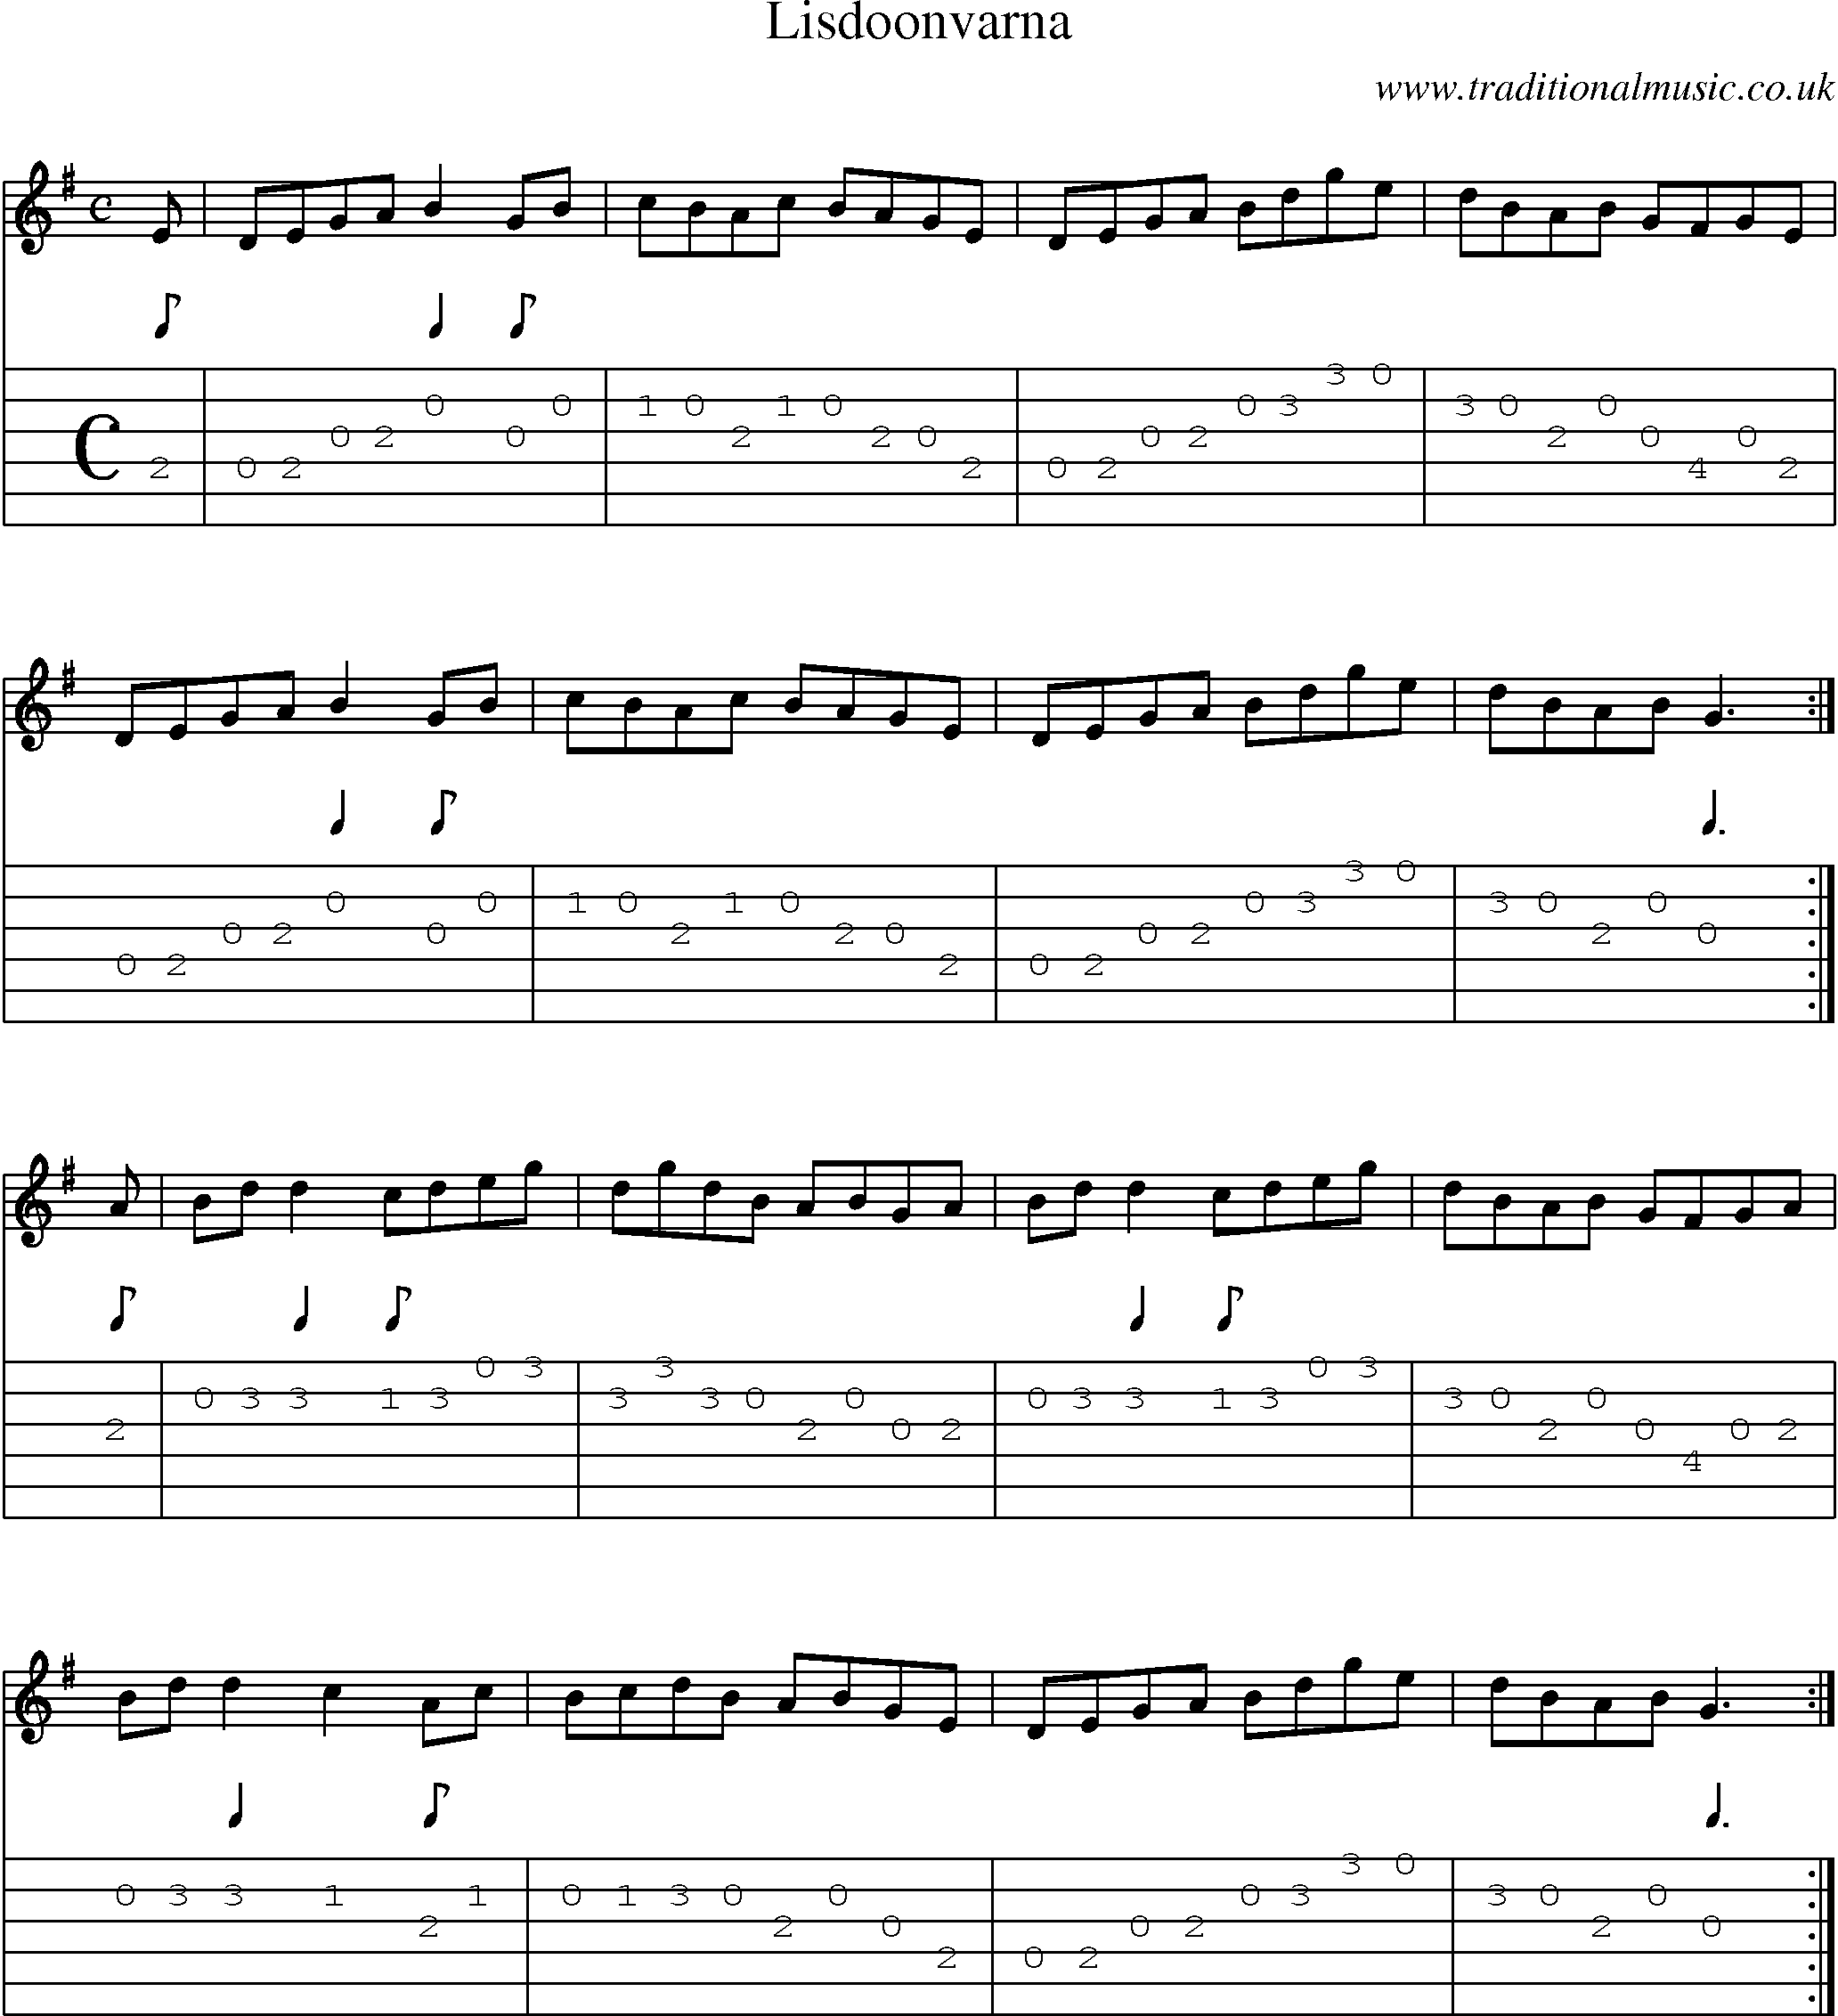 Music Score and Guitar Tabs for Lisdoonvarna